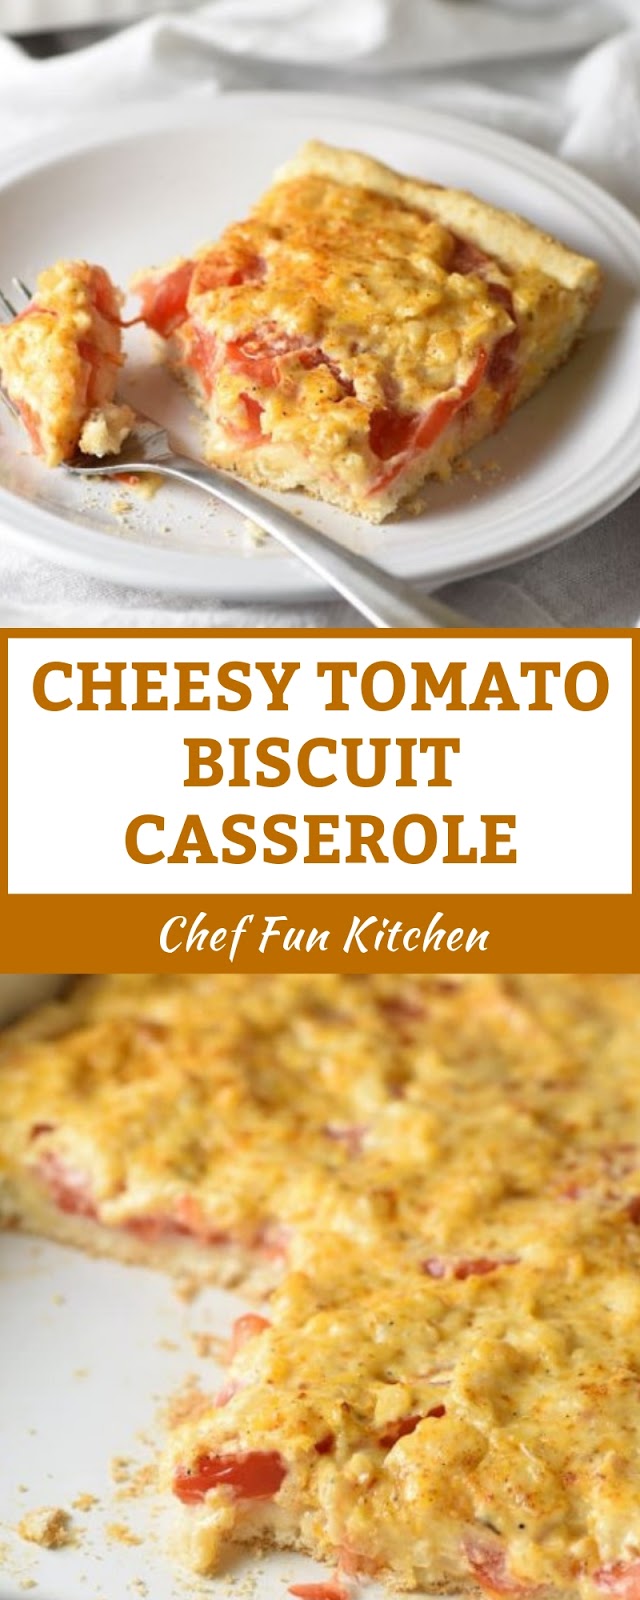 CHEESY TOMATO BISCUIT CASSEROLE